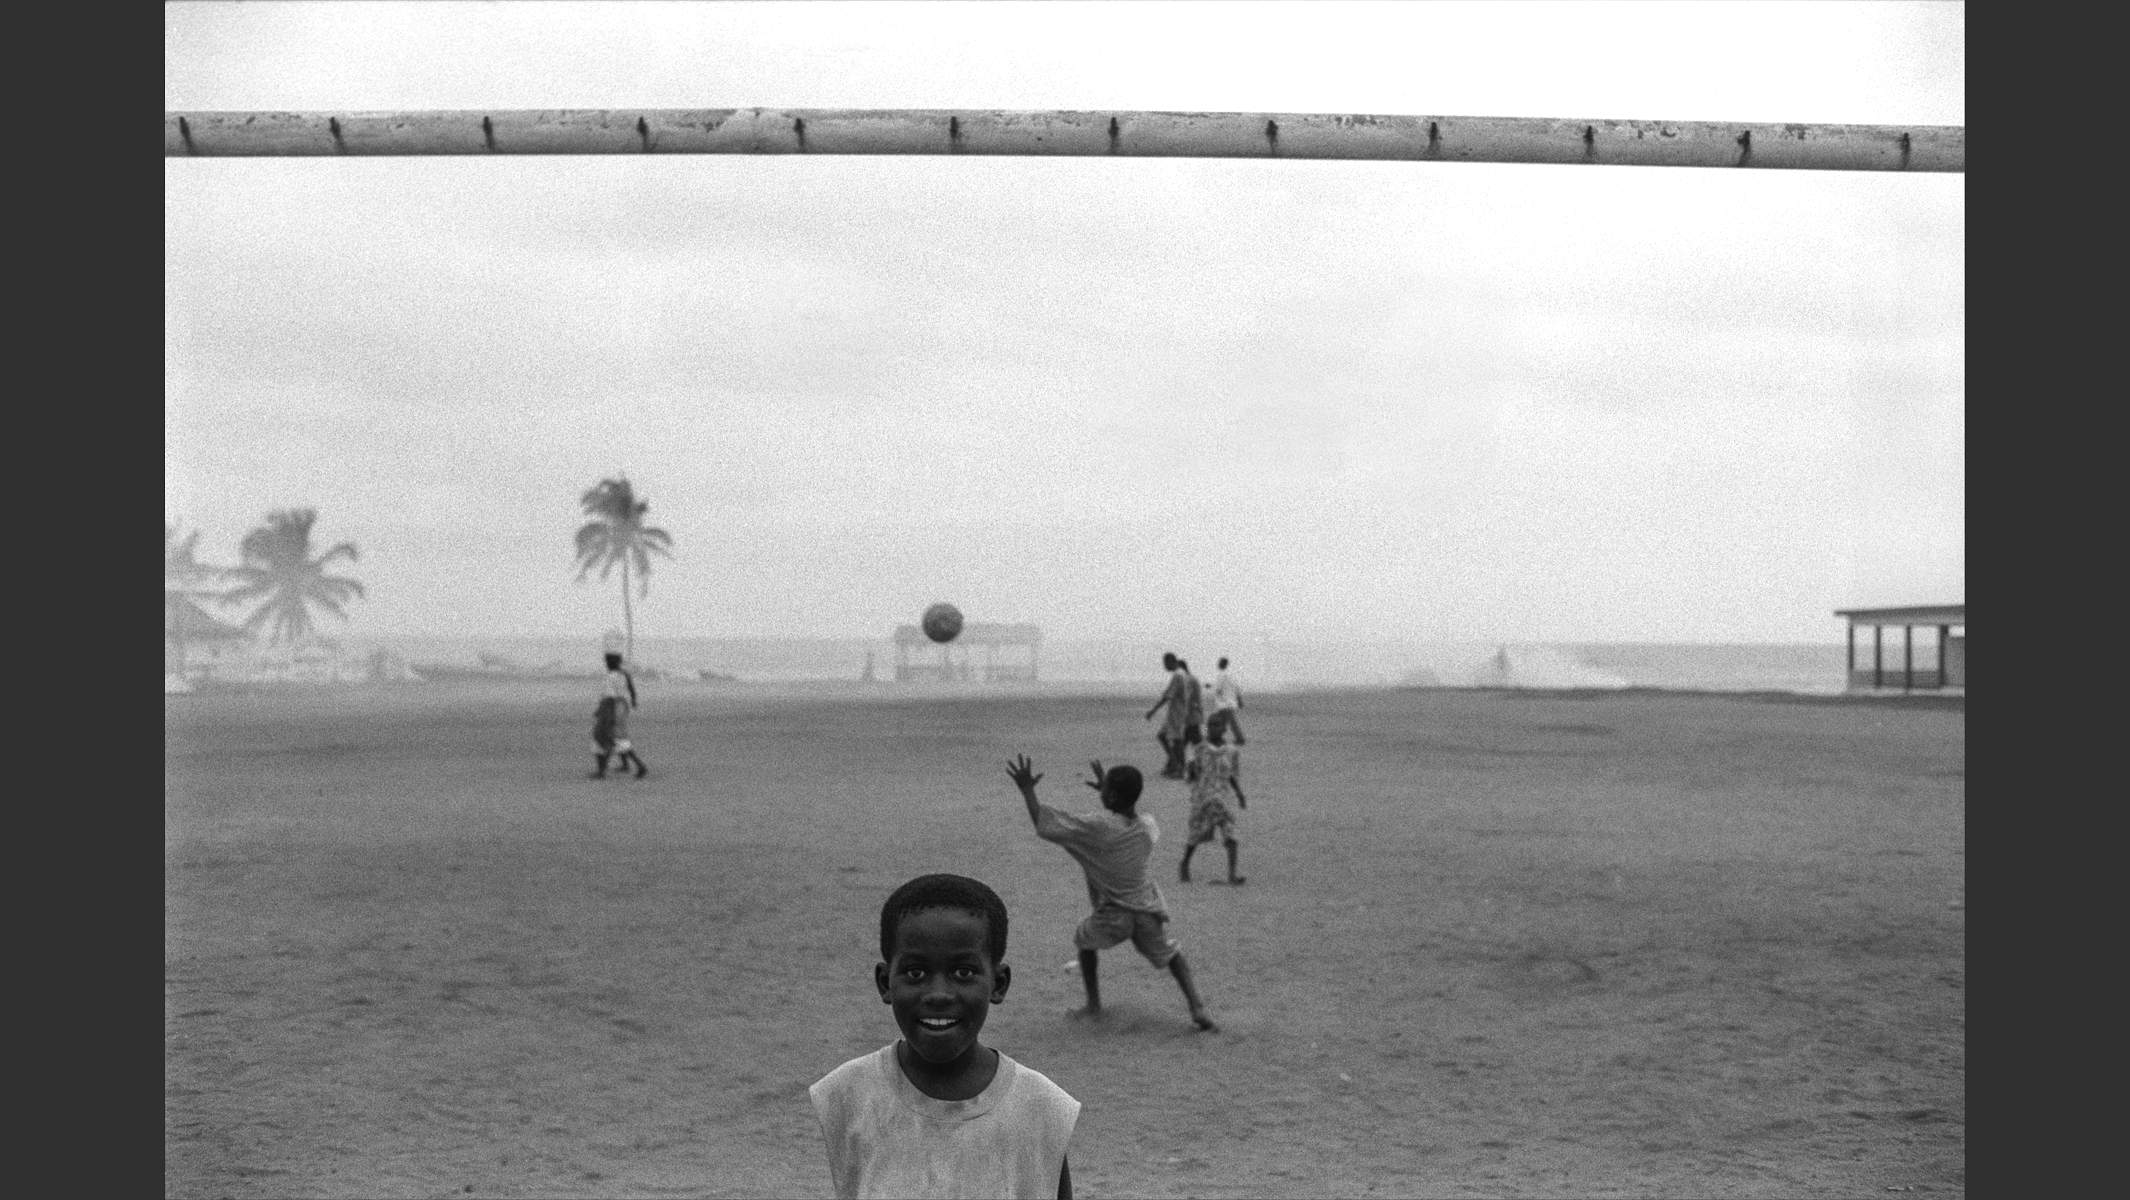 Ball spielende Kinder in Ghana, Foto in schwarzweiss. © Martin Geier